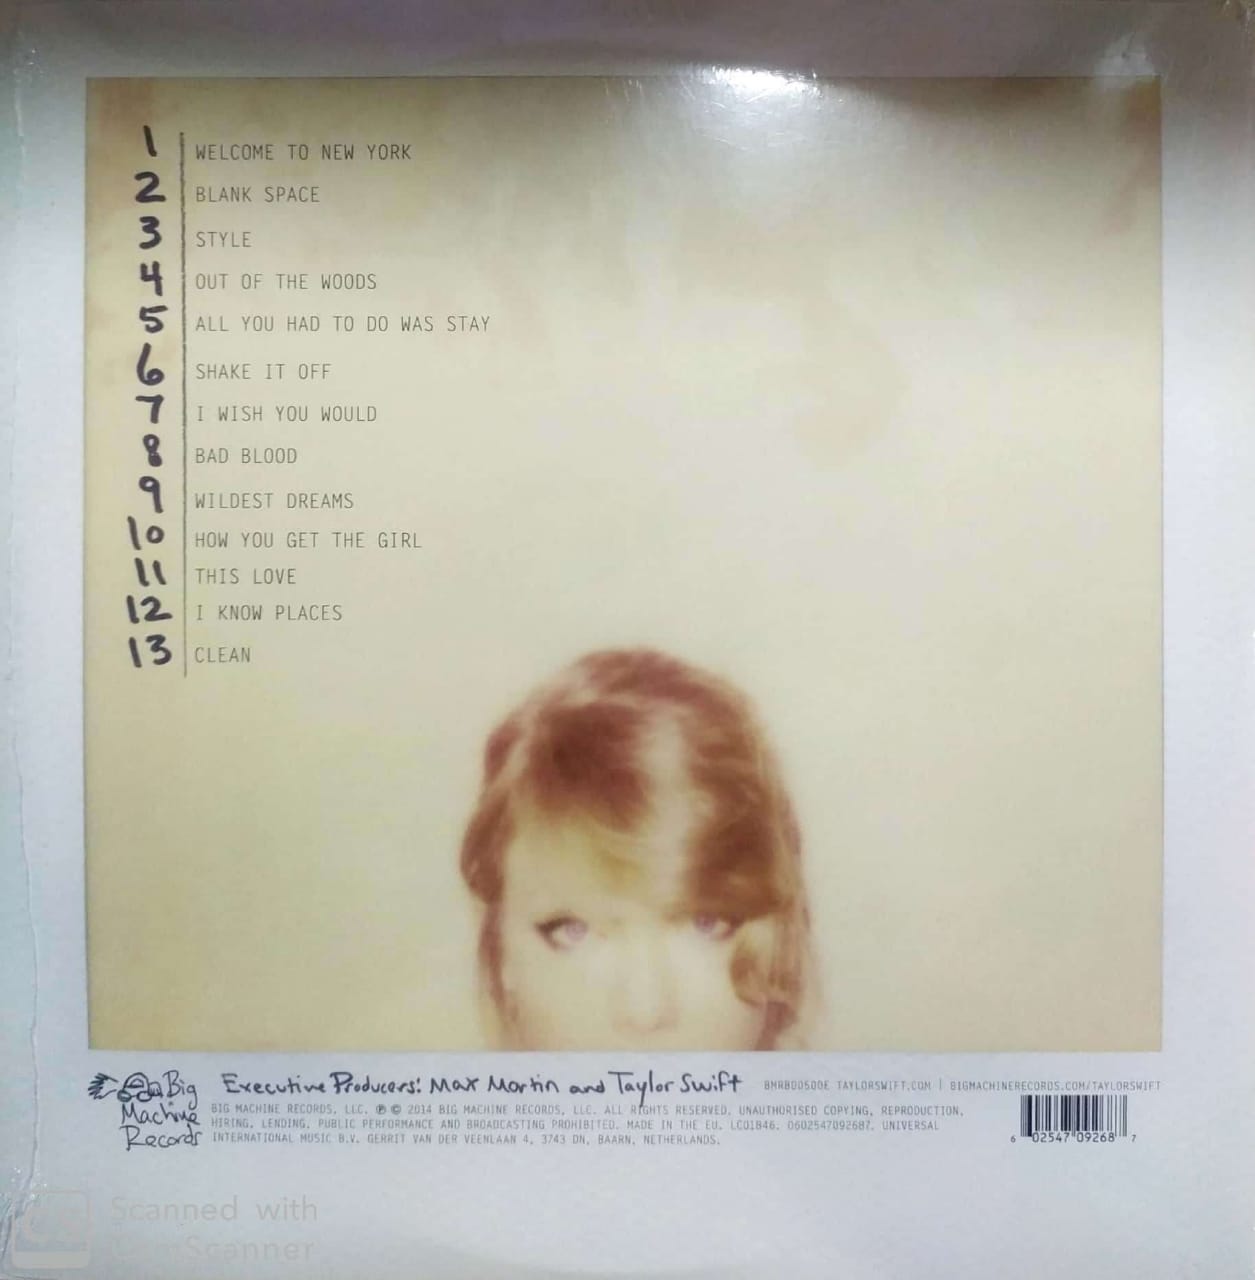 LP Taylor Swift ‎– 1989